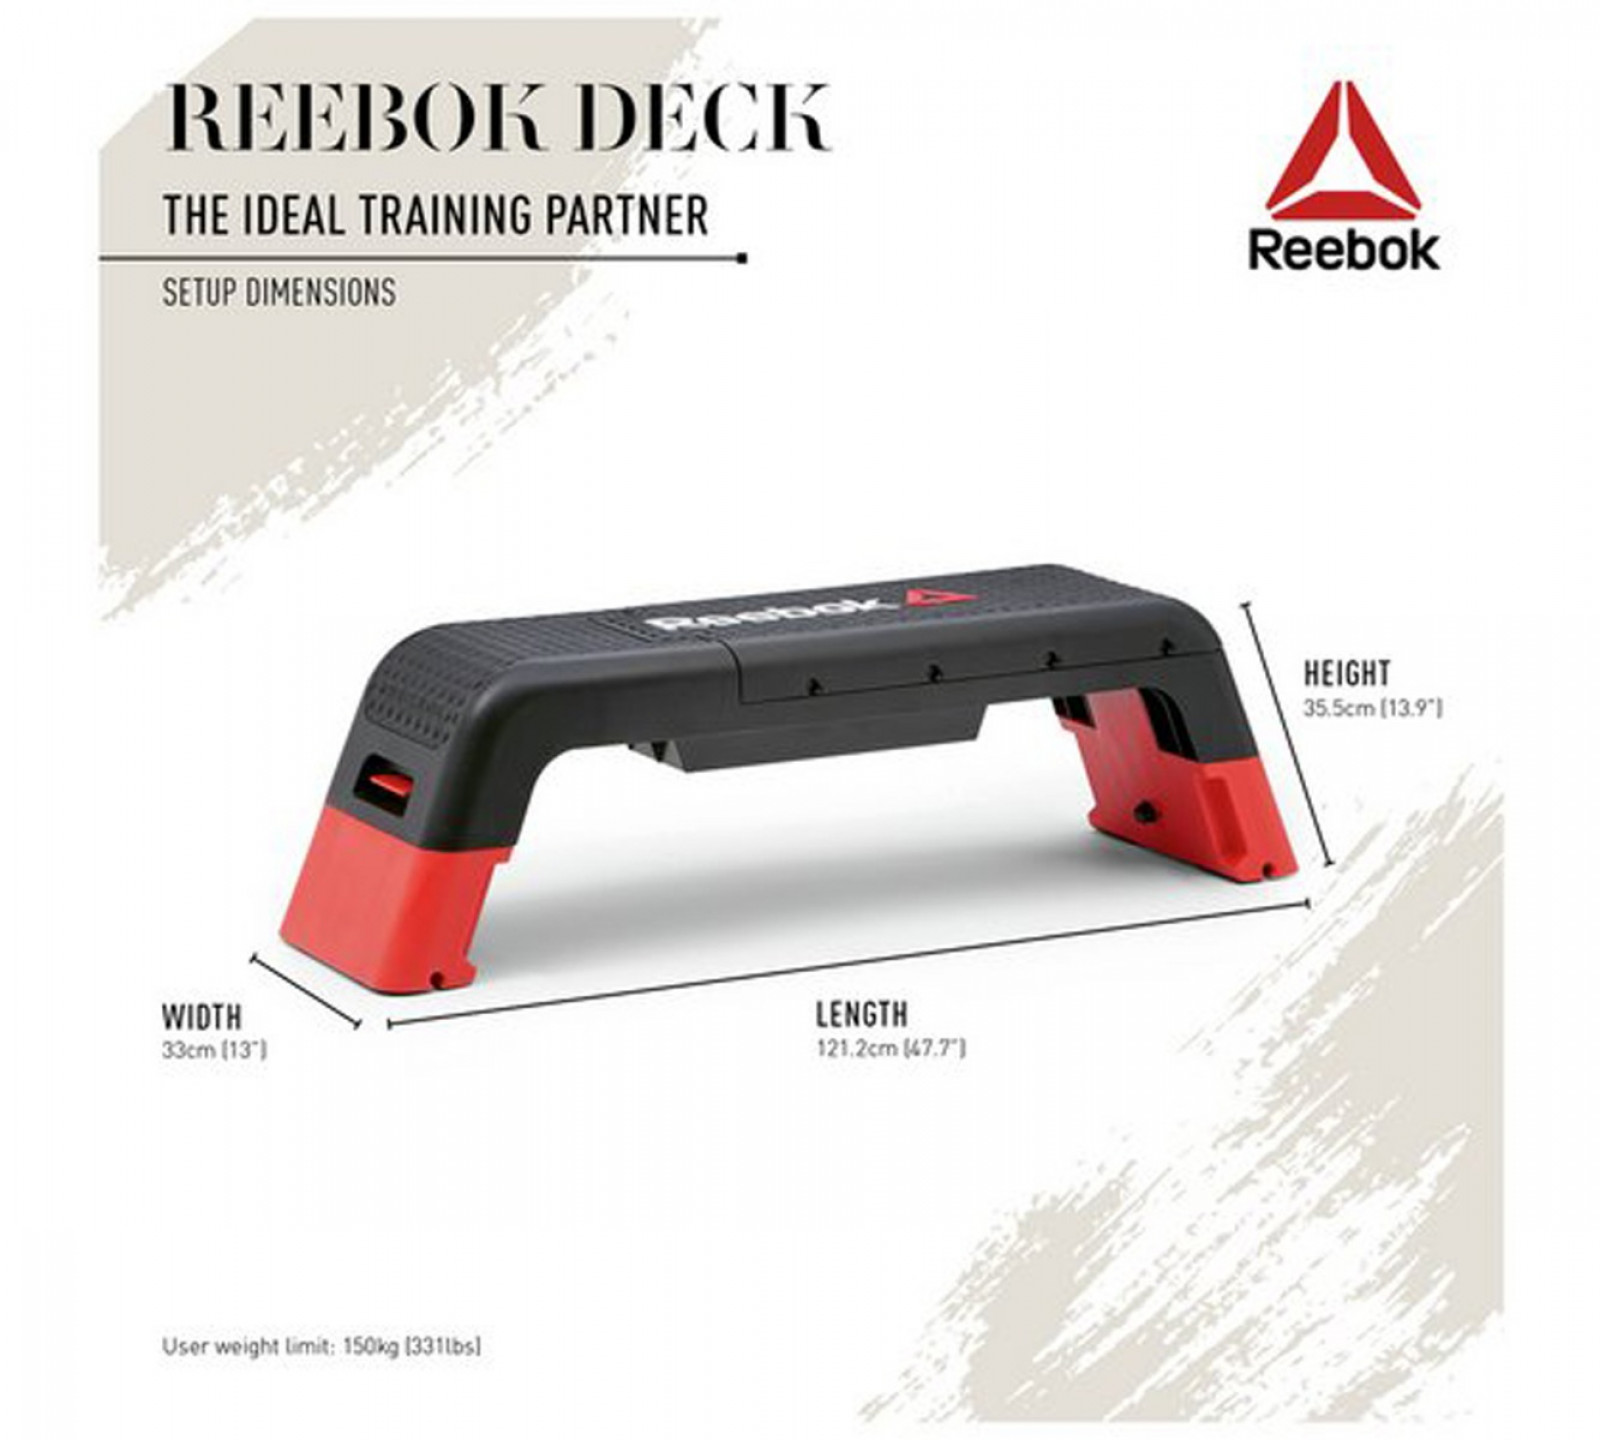 reebok deck length